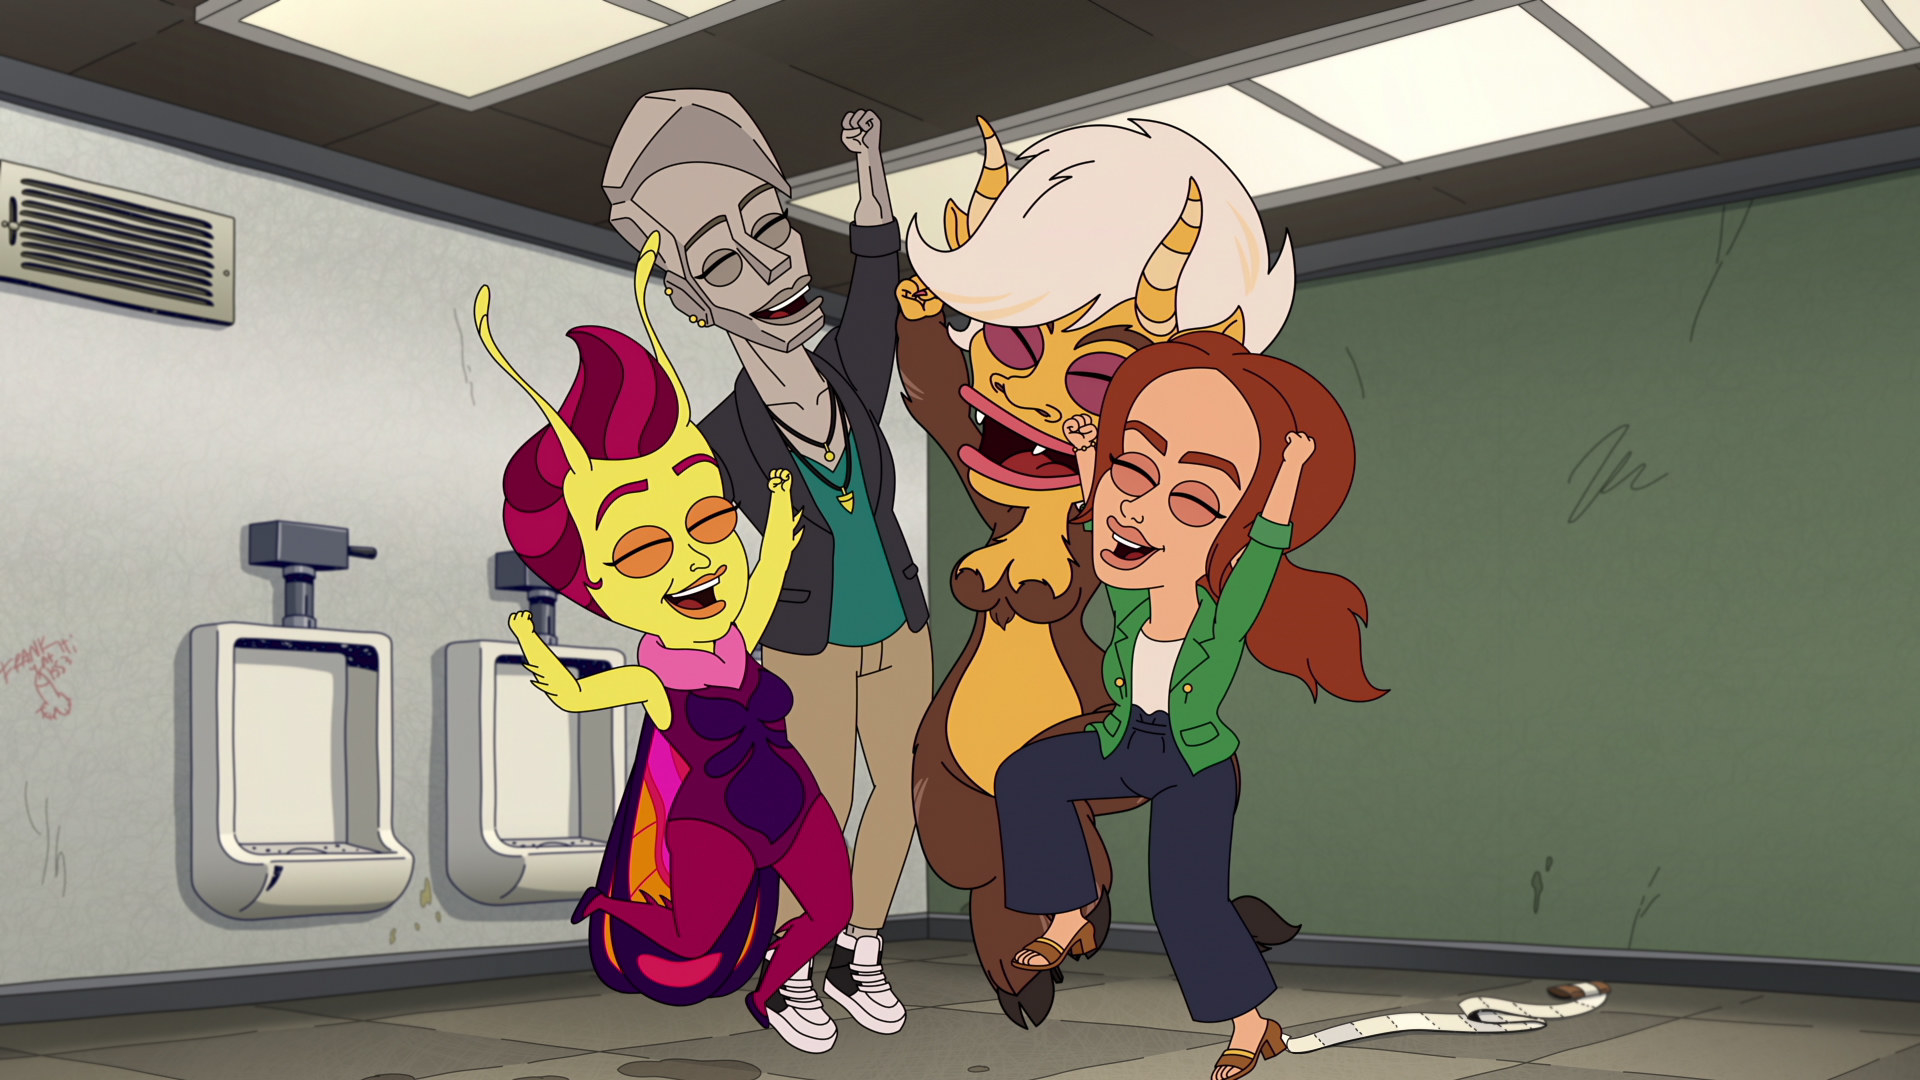 Animated characters celebrating